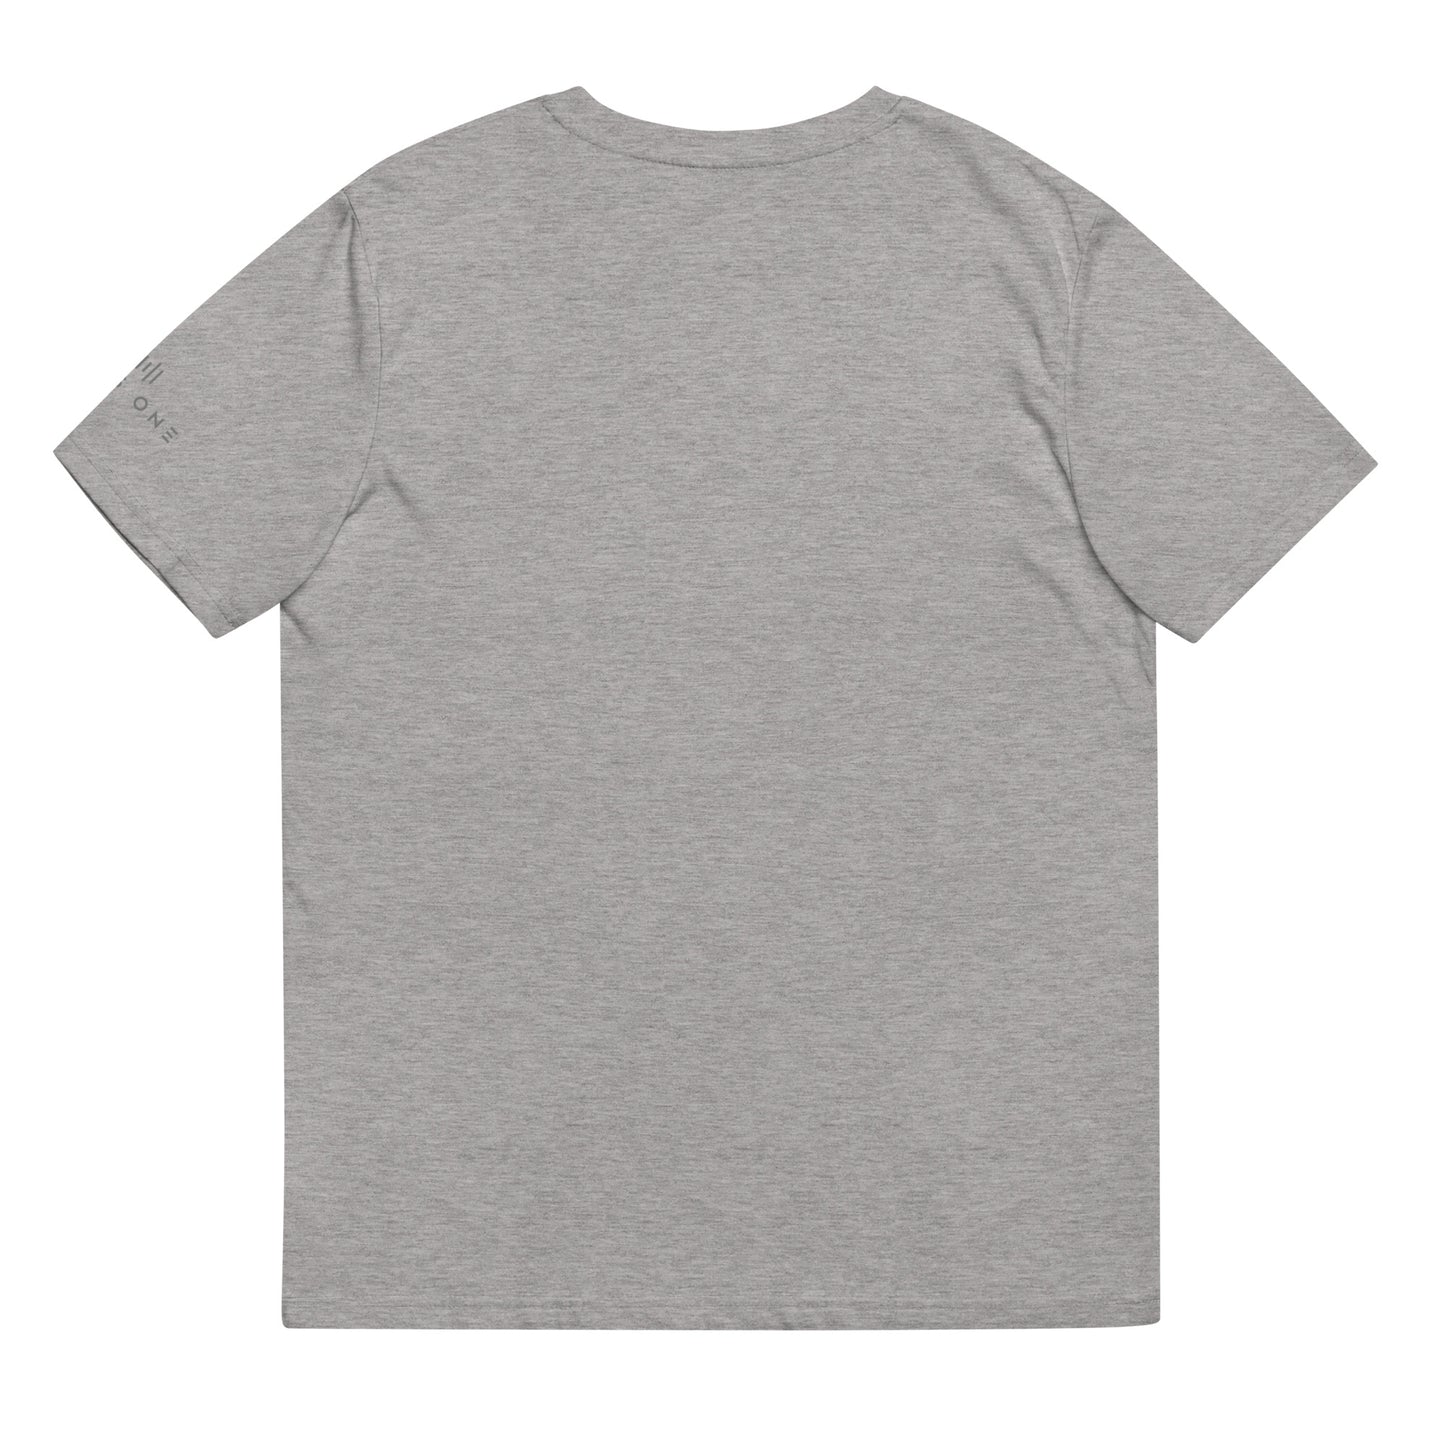 SK8 (v7) Unisex organic cotton t-shirt